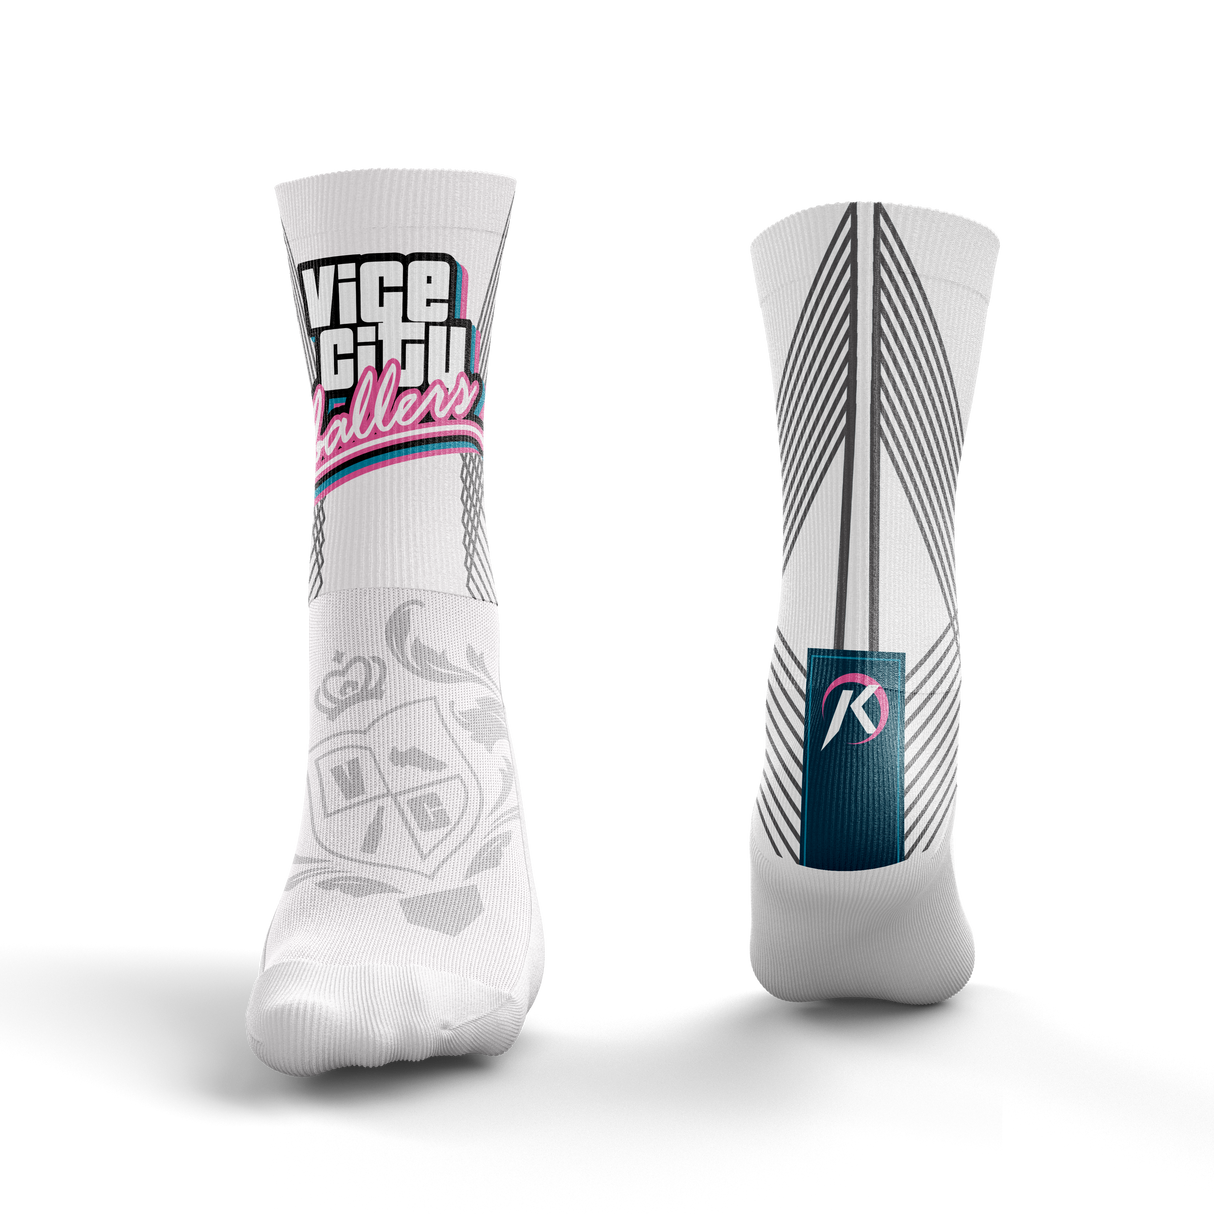 Vice City Ballers - Socks